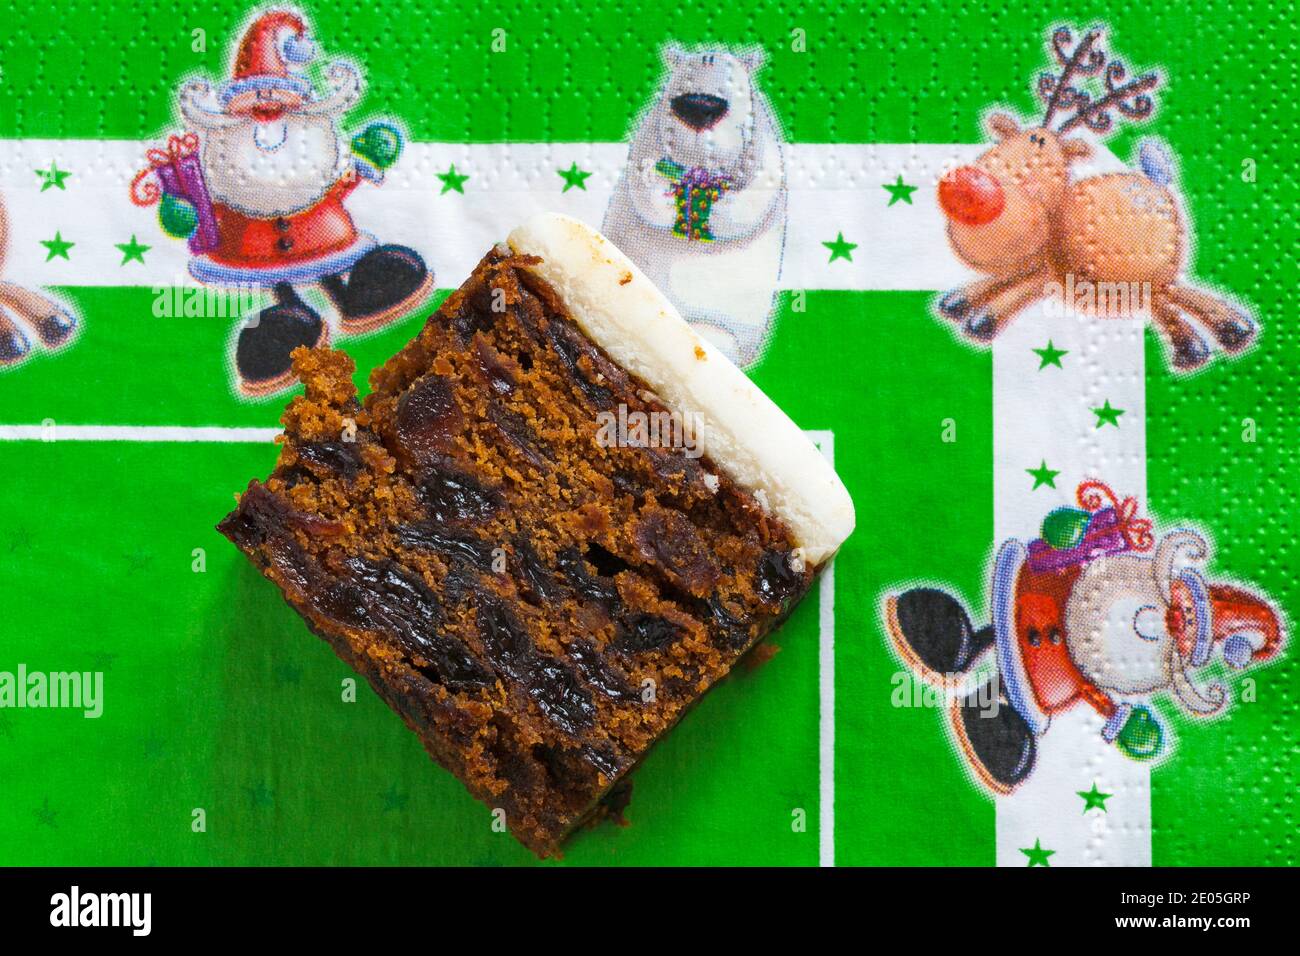 Slice of M&S Iced Fruit Cake Christmas Cake set on green Christmas serviette napkin - UK festive Xmas Stock Photo